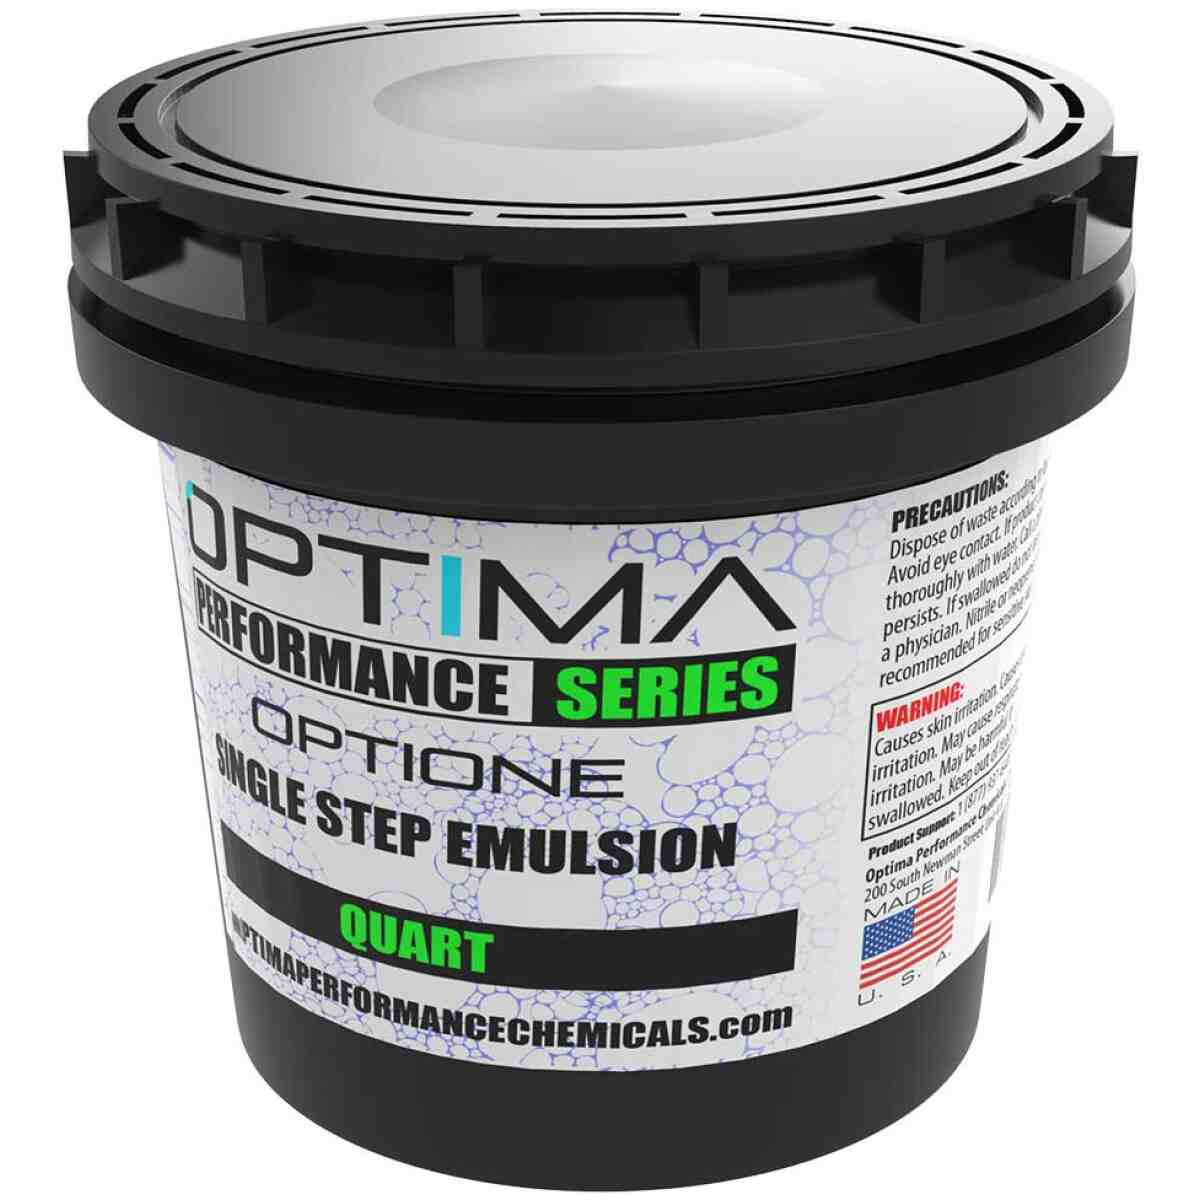 Optione - Single Step Emulsion (Color Pink) OPTIMA PERFORMANCE SERIES®